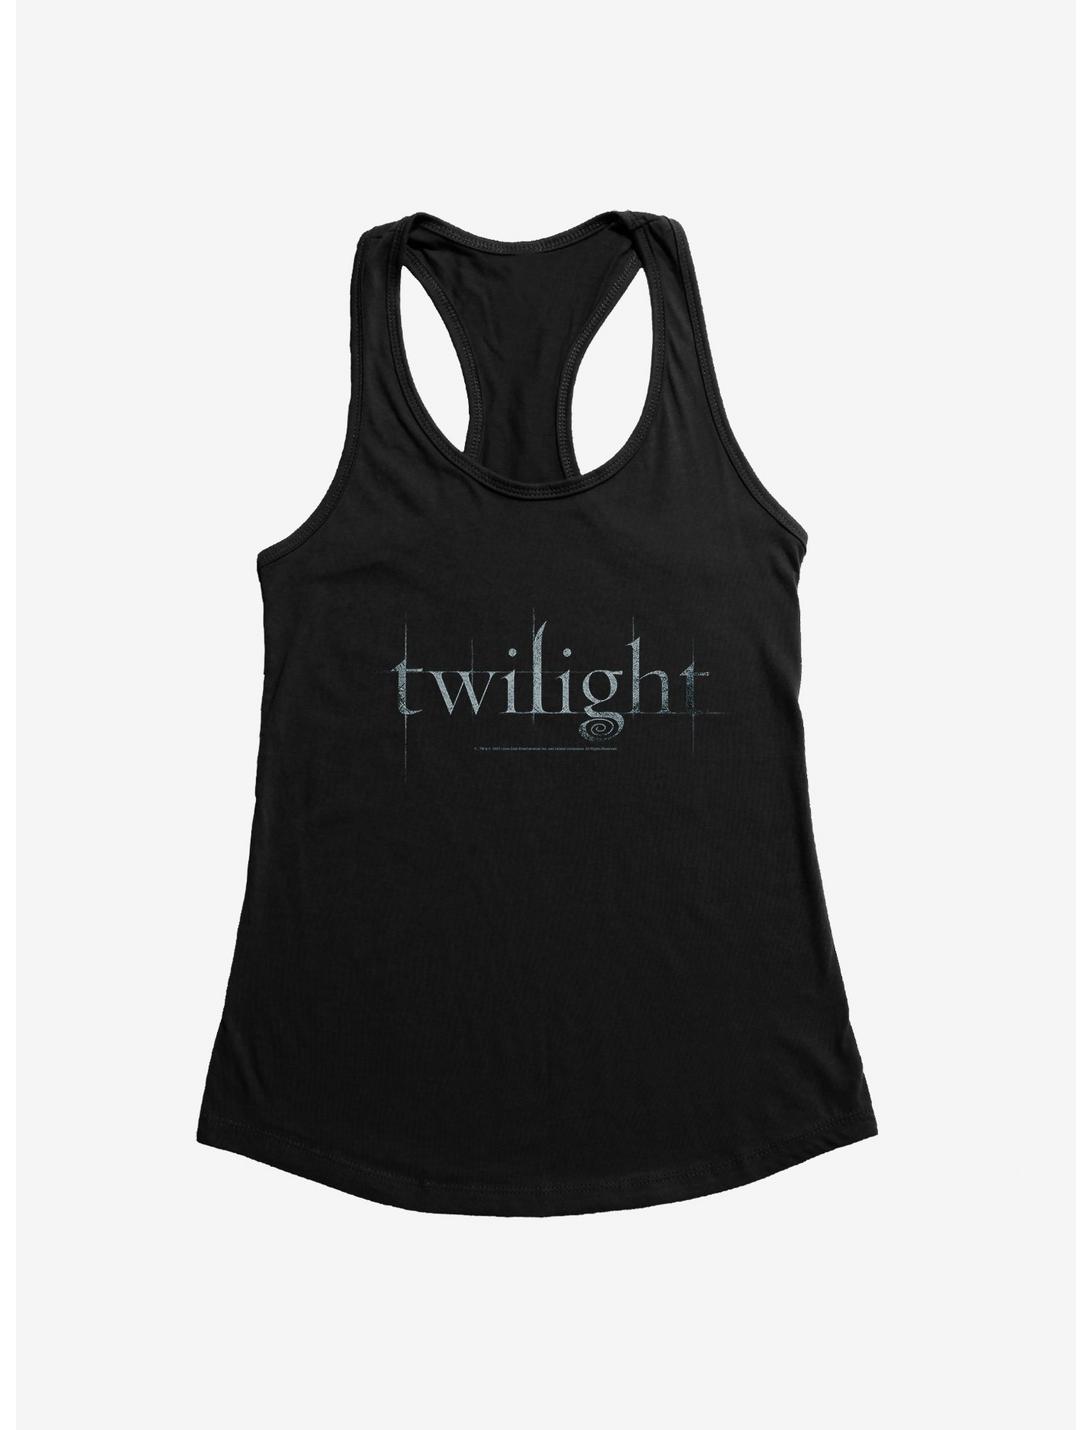 Twilight Logo Girls Tank, BLACK, hi-res